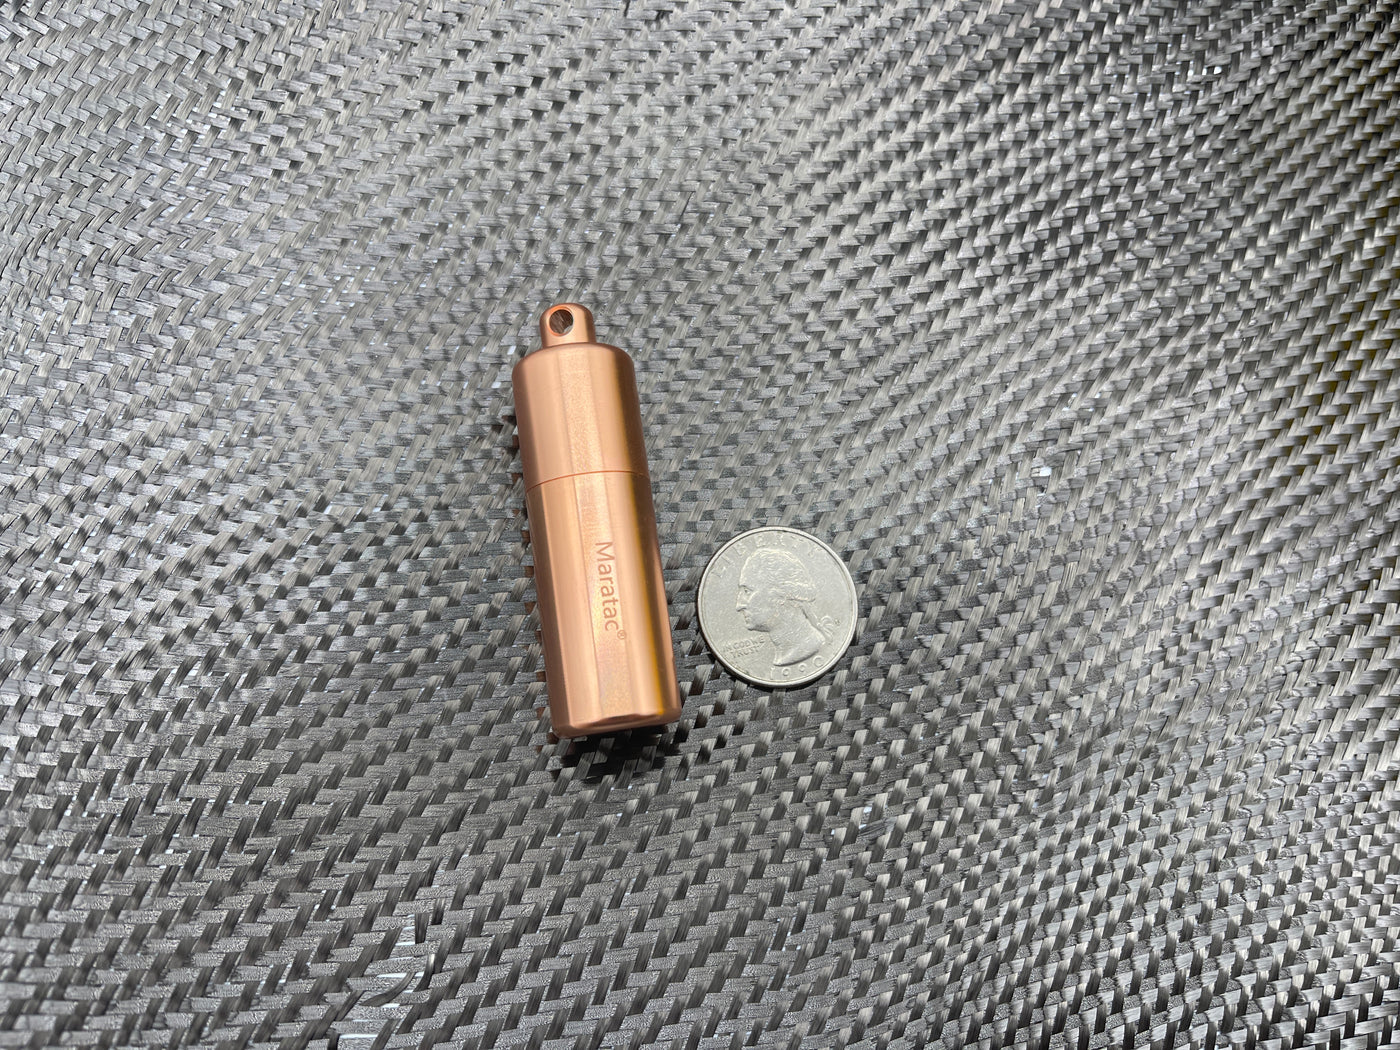 Copper XL Peanut Lighter Gen 3 By Maratac®